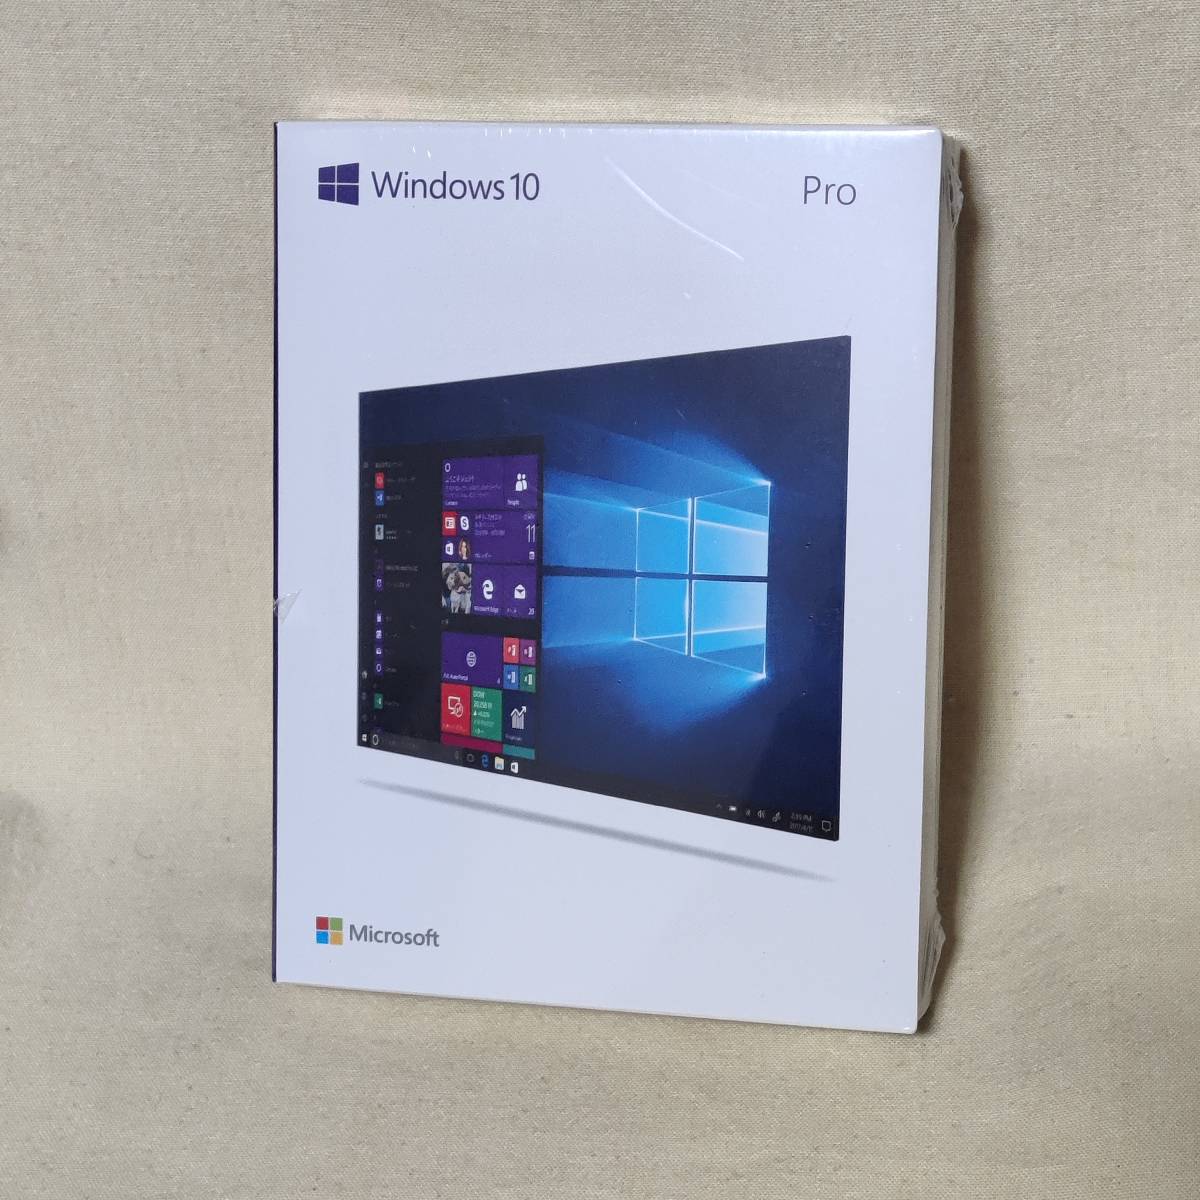 【387628】Microsoft Windows 10 Pro 正規品 パッケージ版 USB版 新品 未使用 未開封 _画像1